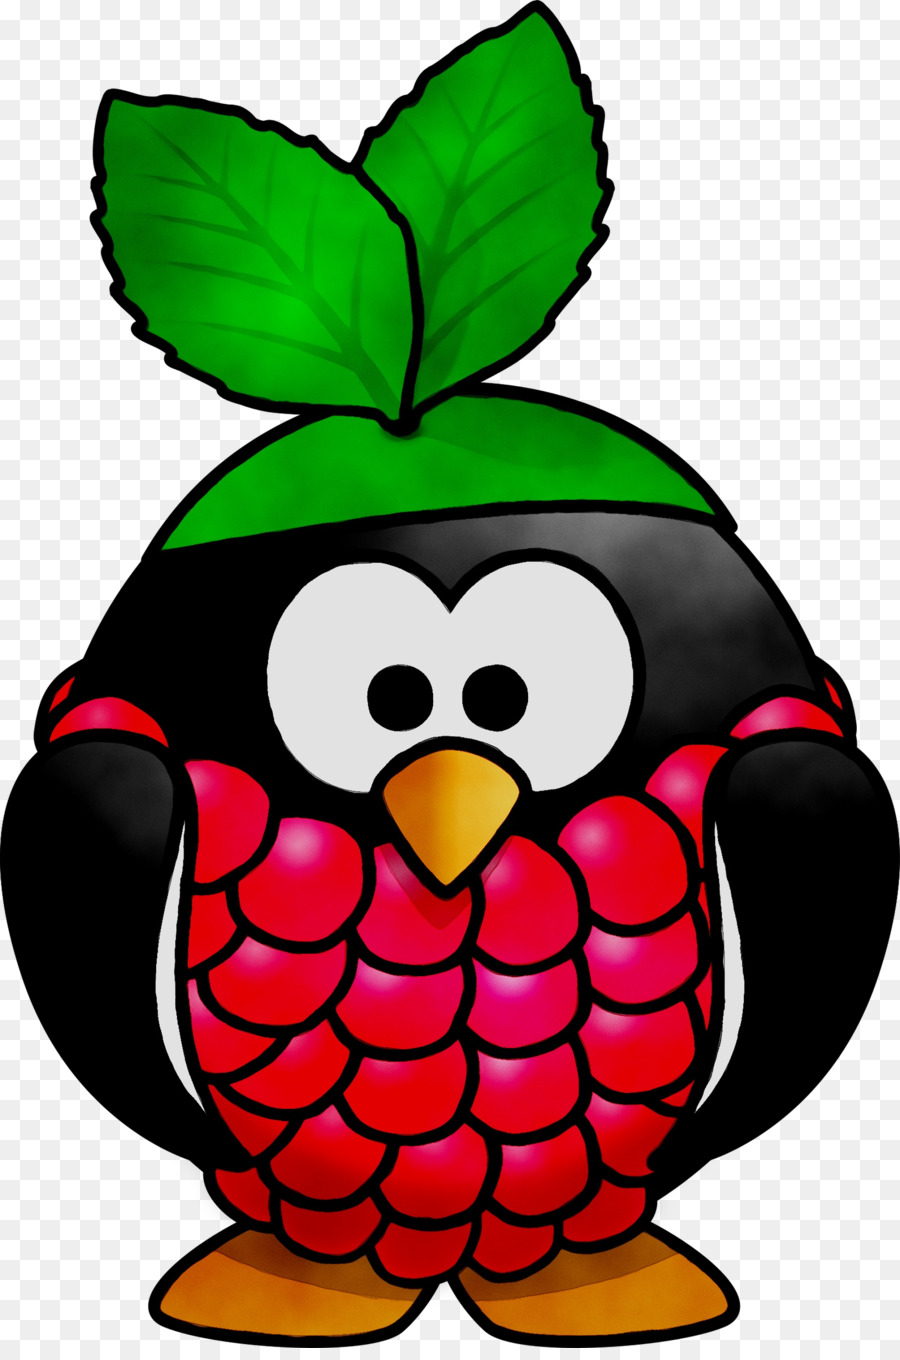 Clip art Becco di Frutta Raspberry Pi - 